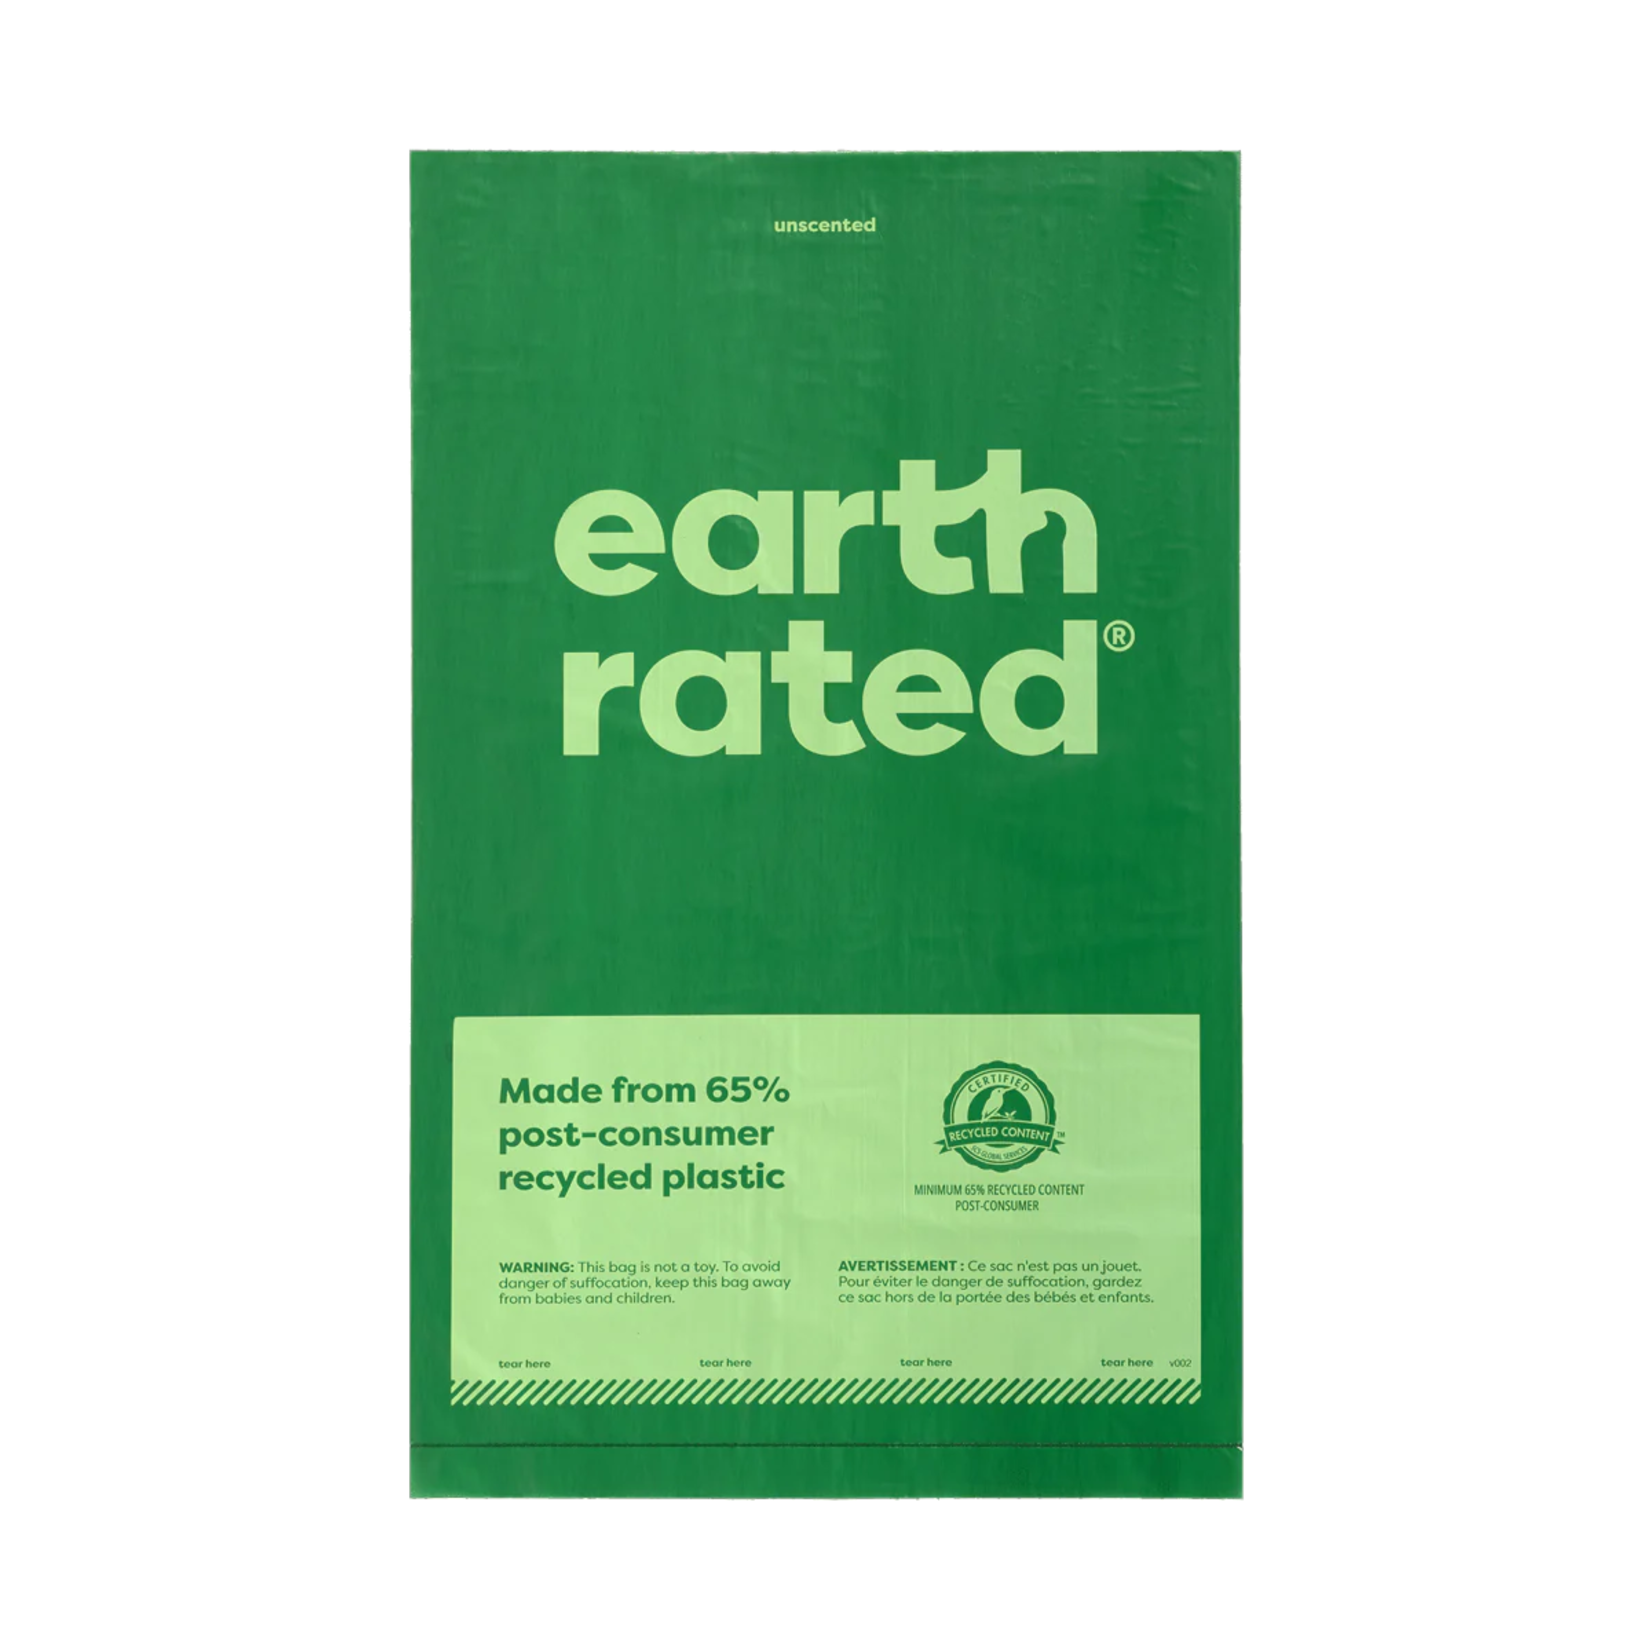 Earth Rated Poop Bag Bulk Single 300ct Roll